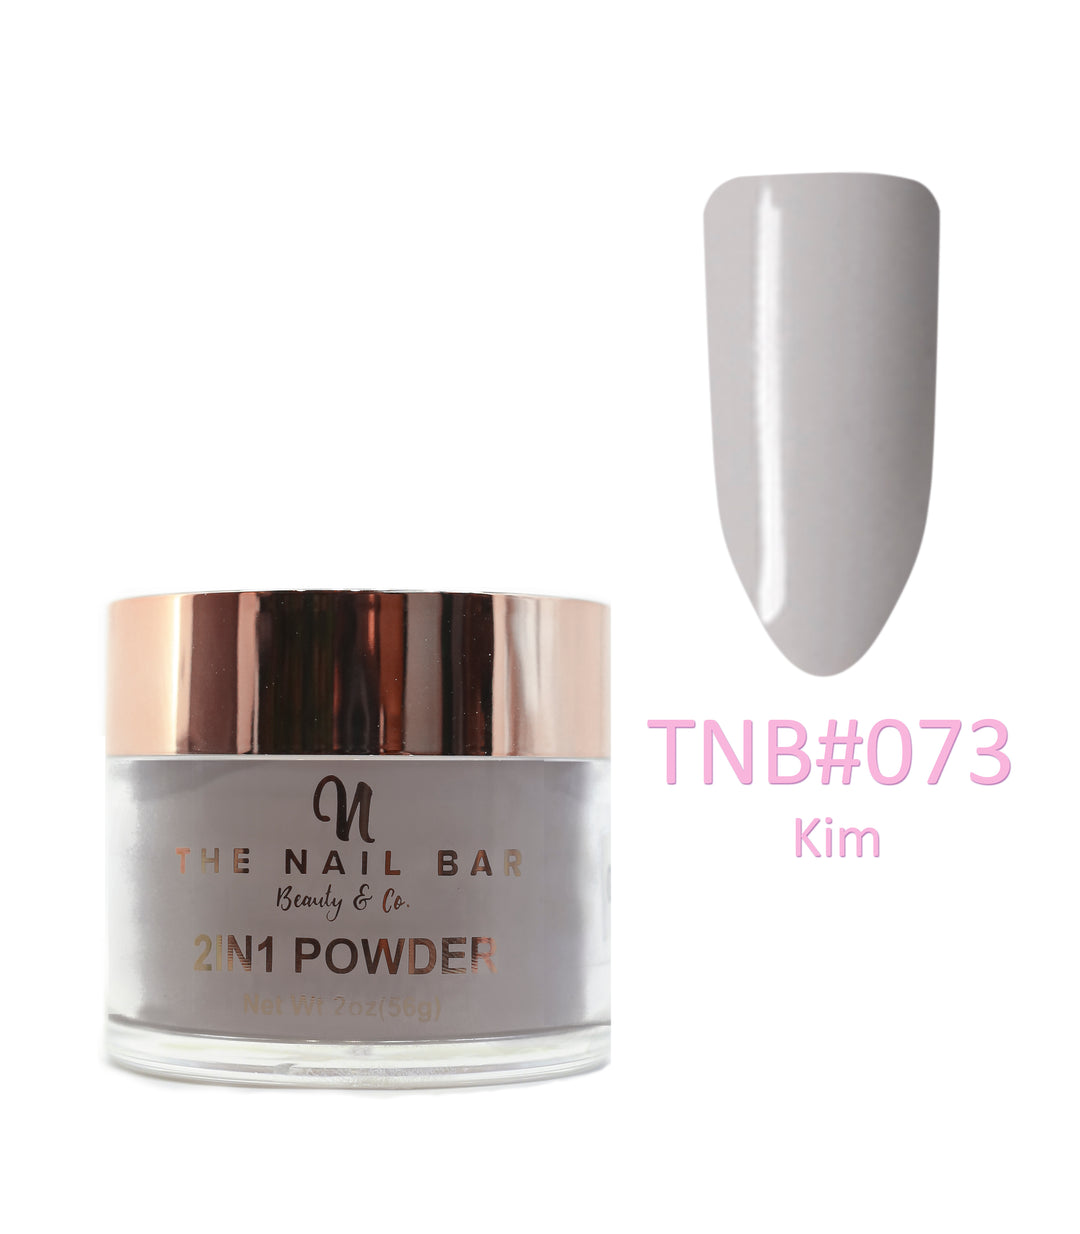 2-In-1 Dipping/Acrylic colour powder (2oz) -Kim - The Nail Bar Beauty & Co.